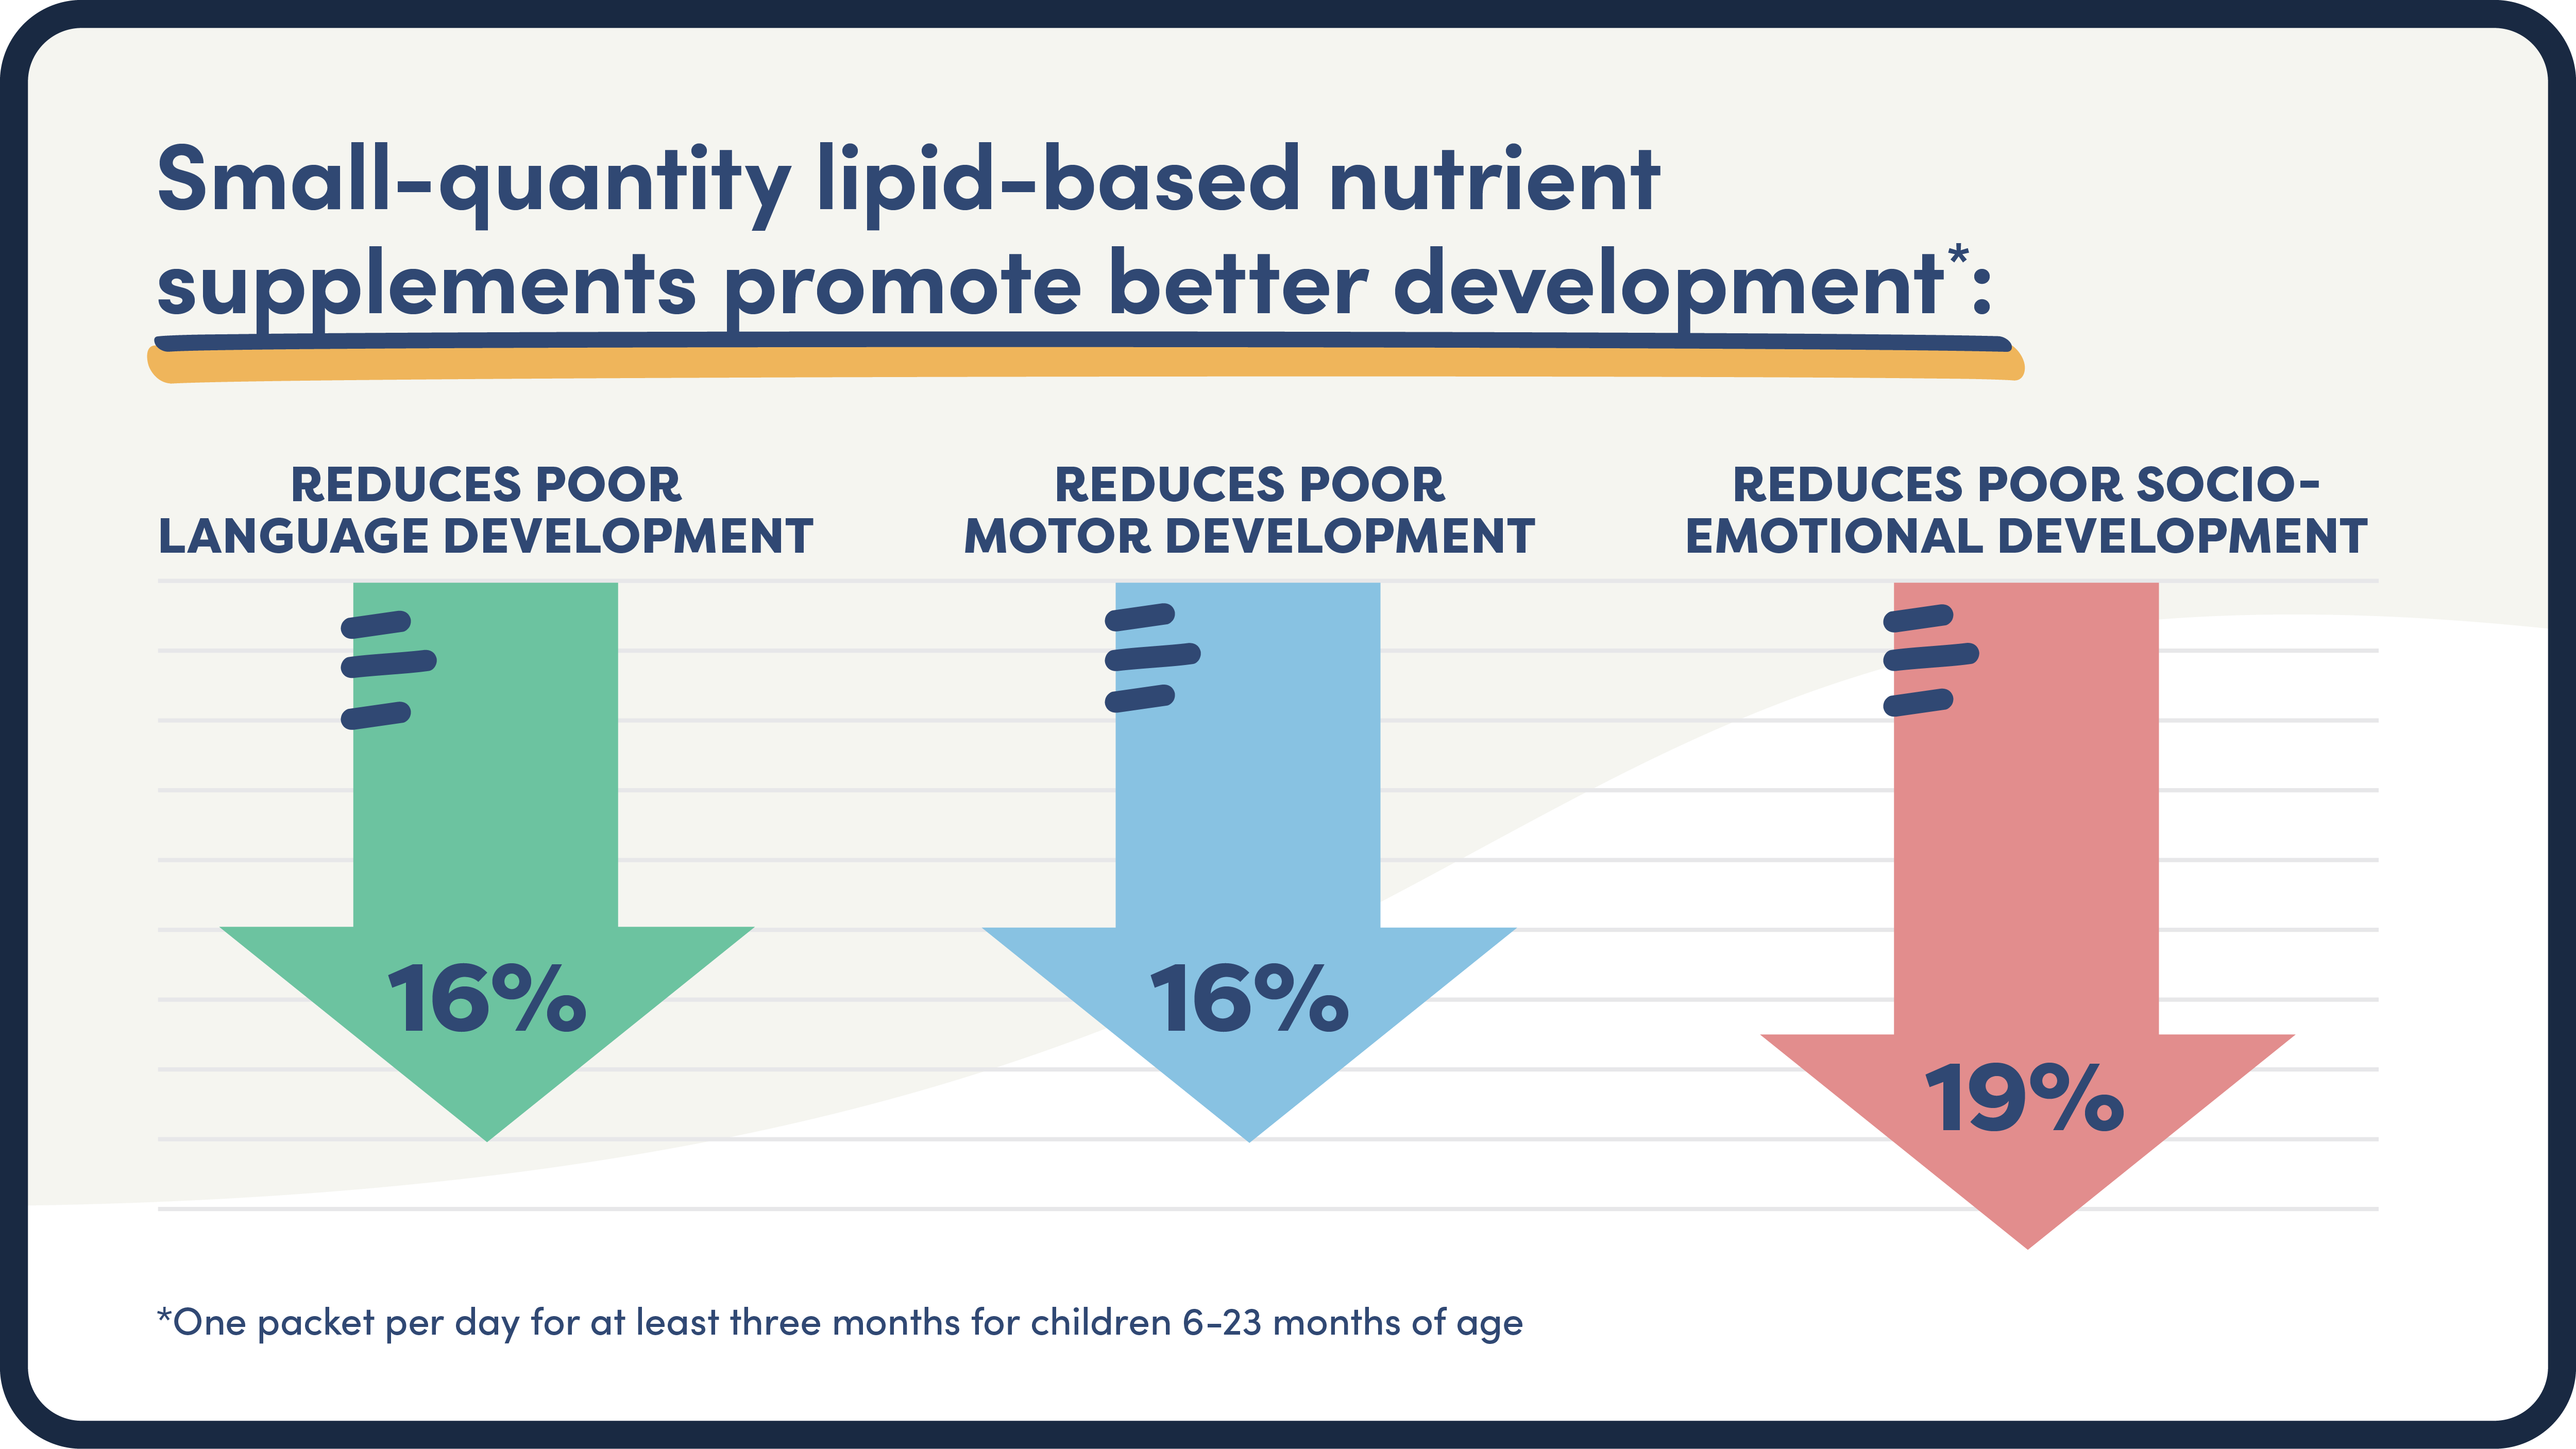 Small quantity lipid-based supplements prevent better development